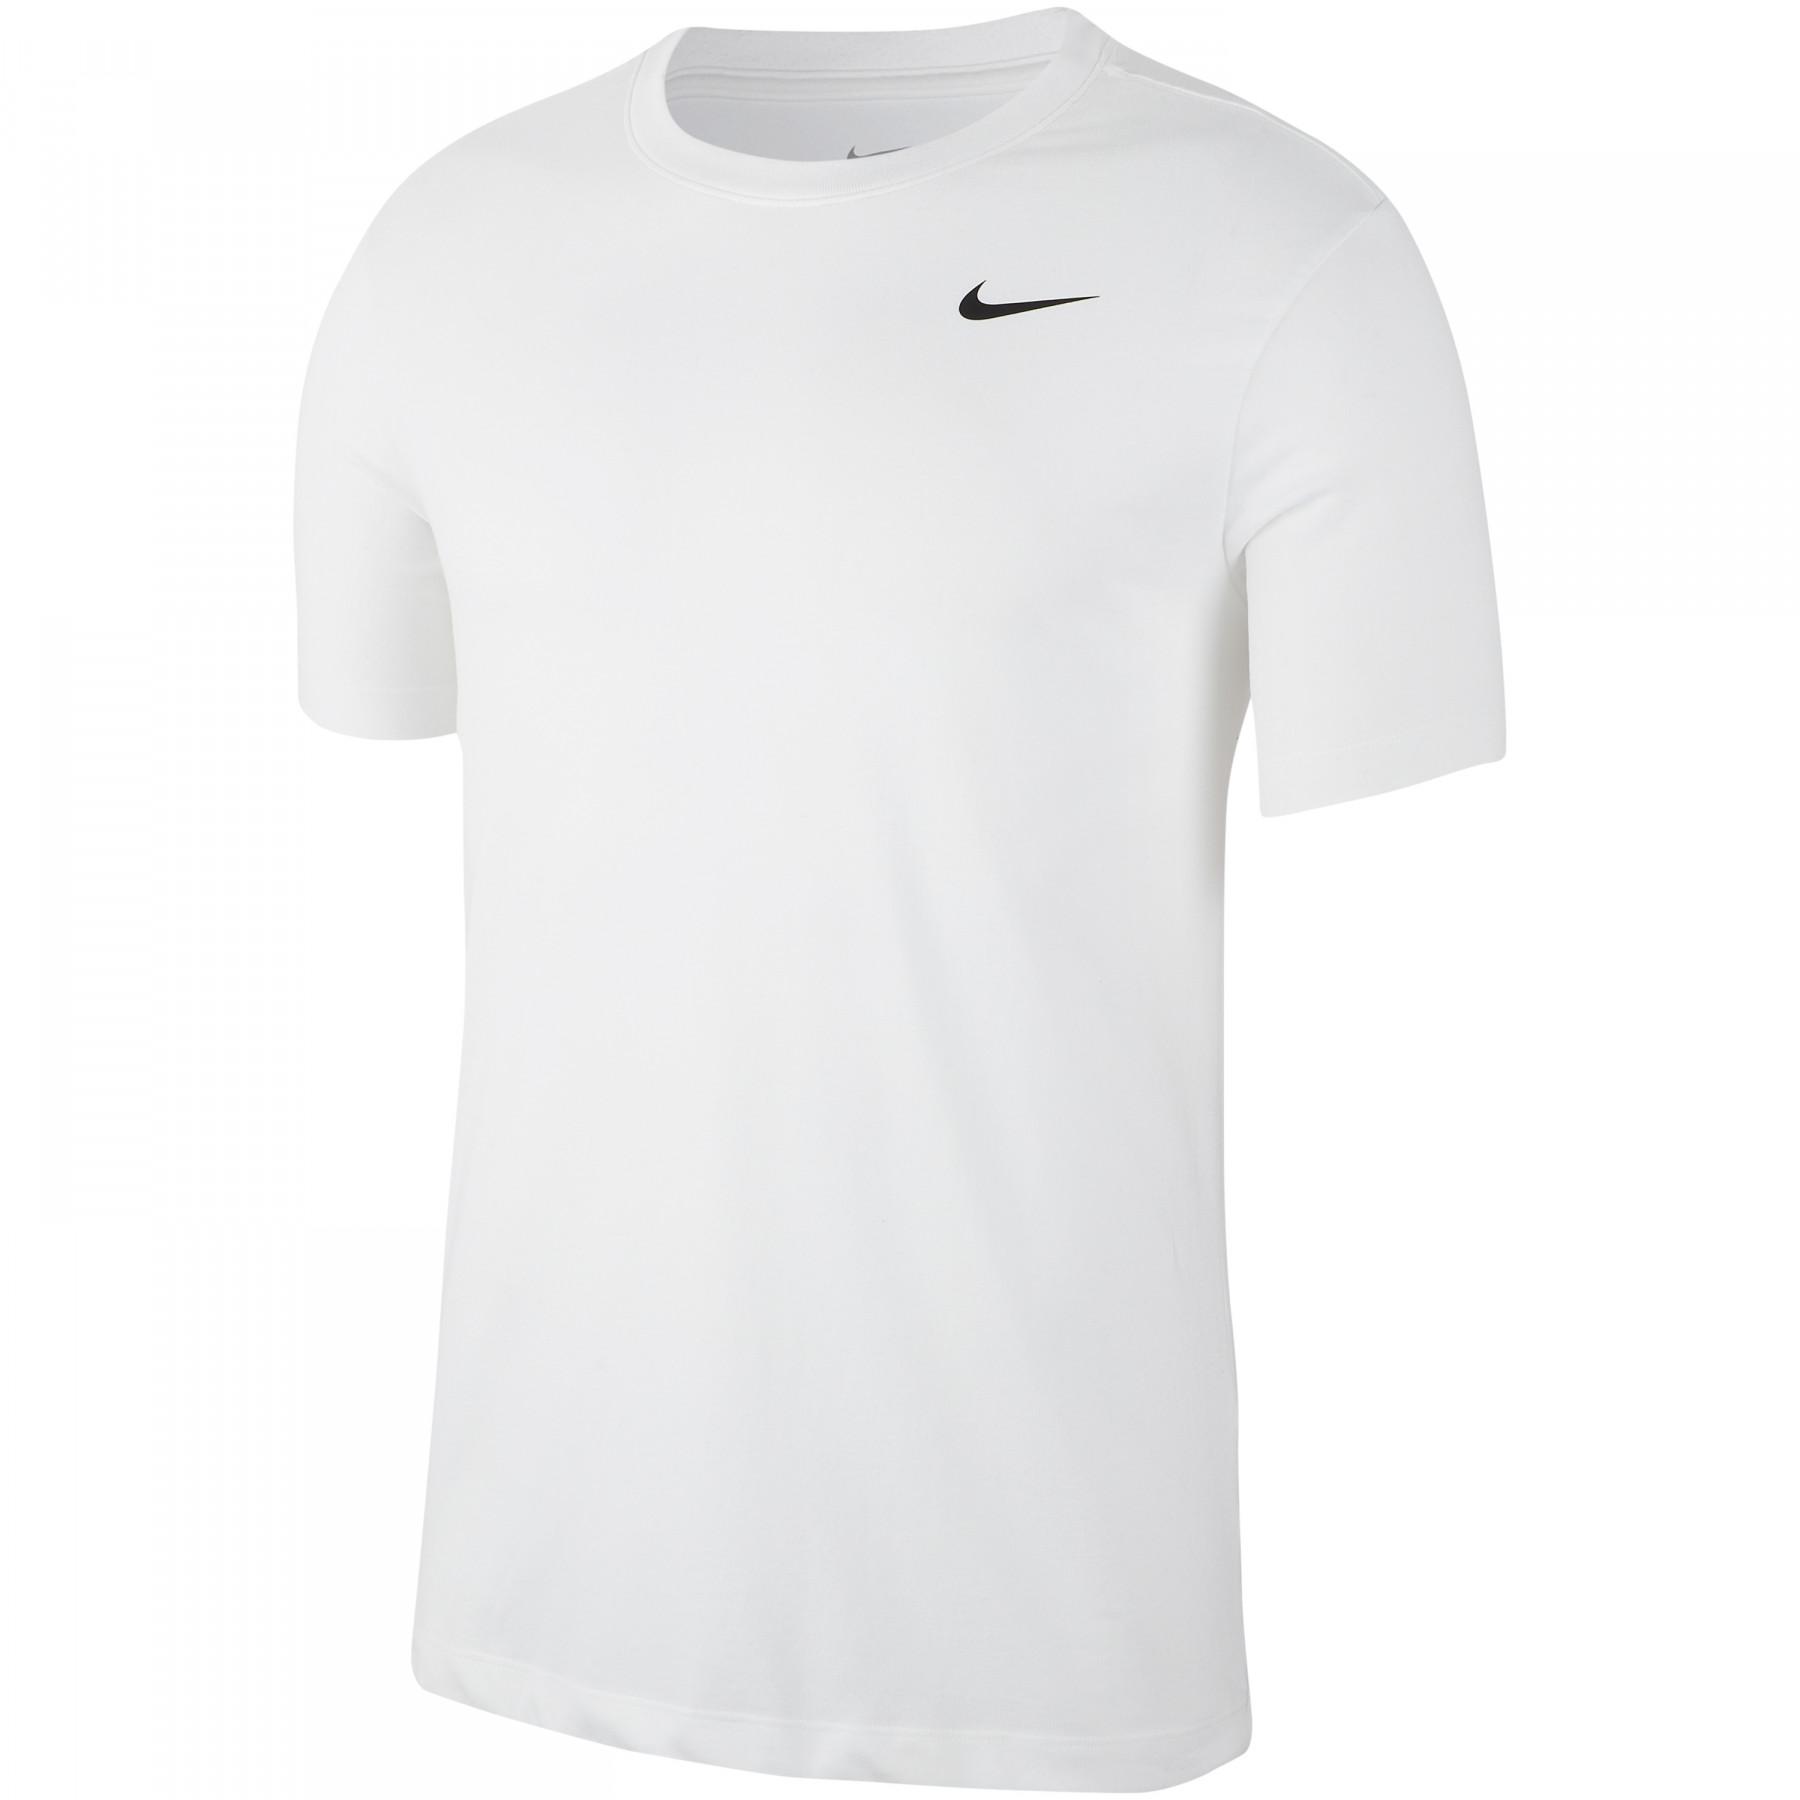 Incierto tienda de comestibles esta T-shirt Nike Dri-FIT - Nike - Training shirts - Teamwear